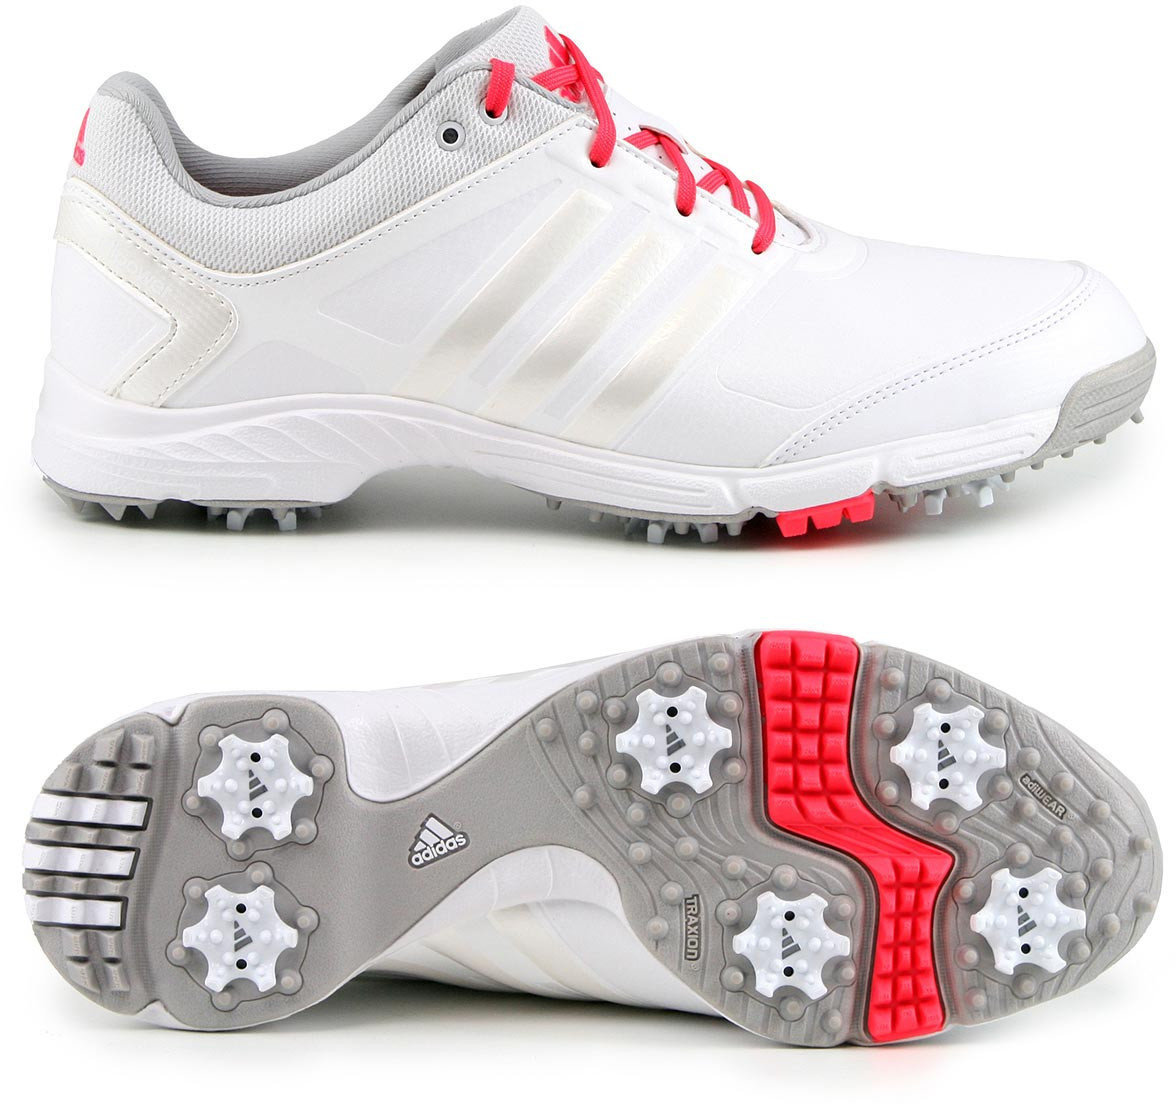 Chaussures de golf pour femmes Adidas Adipower Tour Chaussures de Golf pour Hommes White/Metallic/Shock Red UK 4